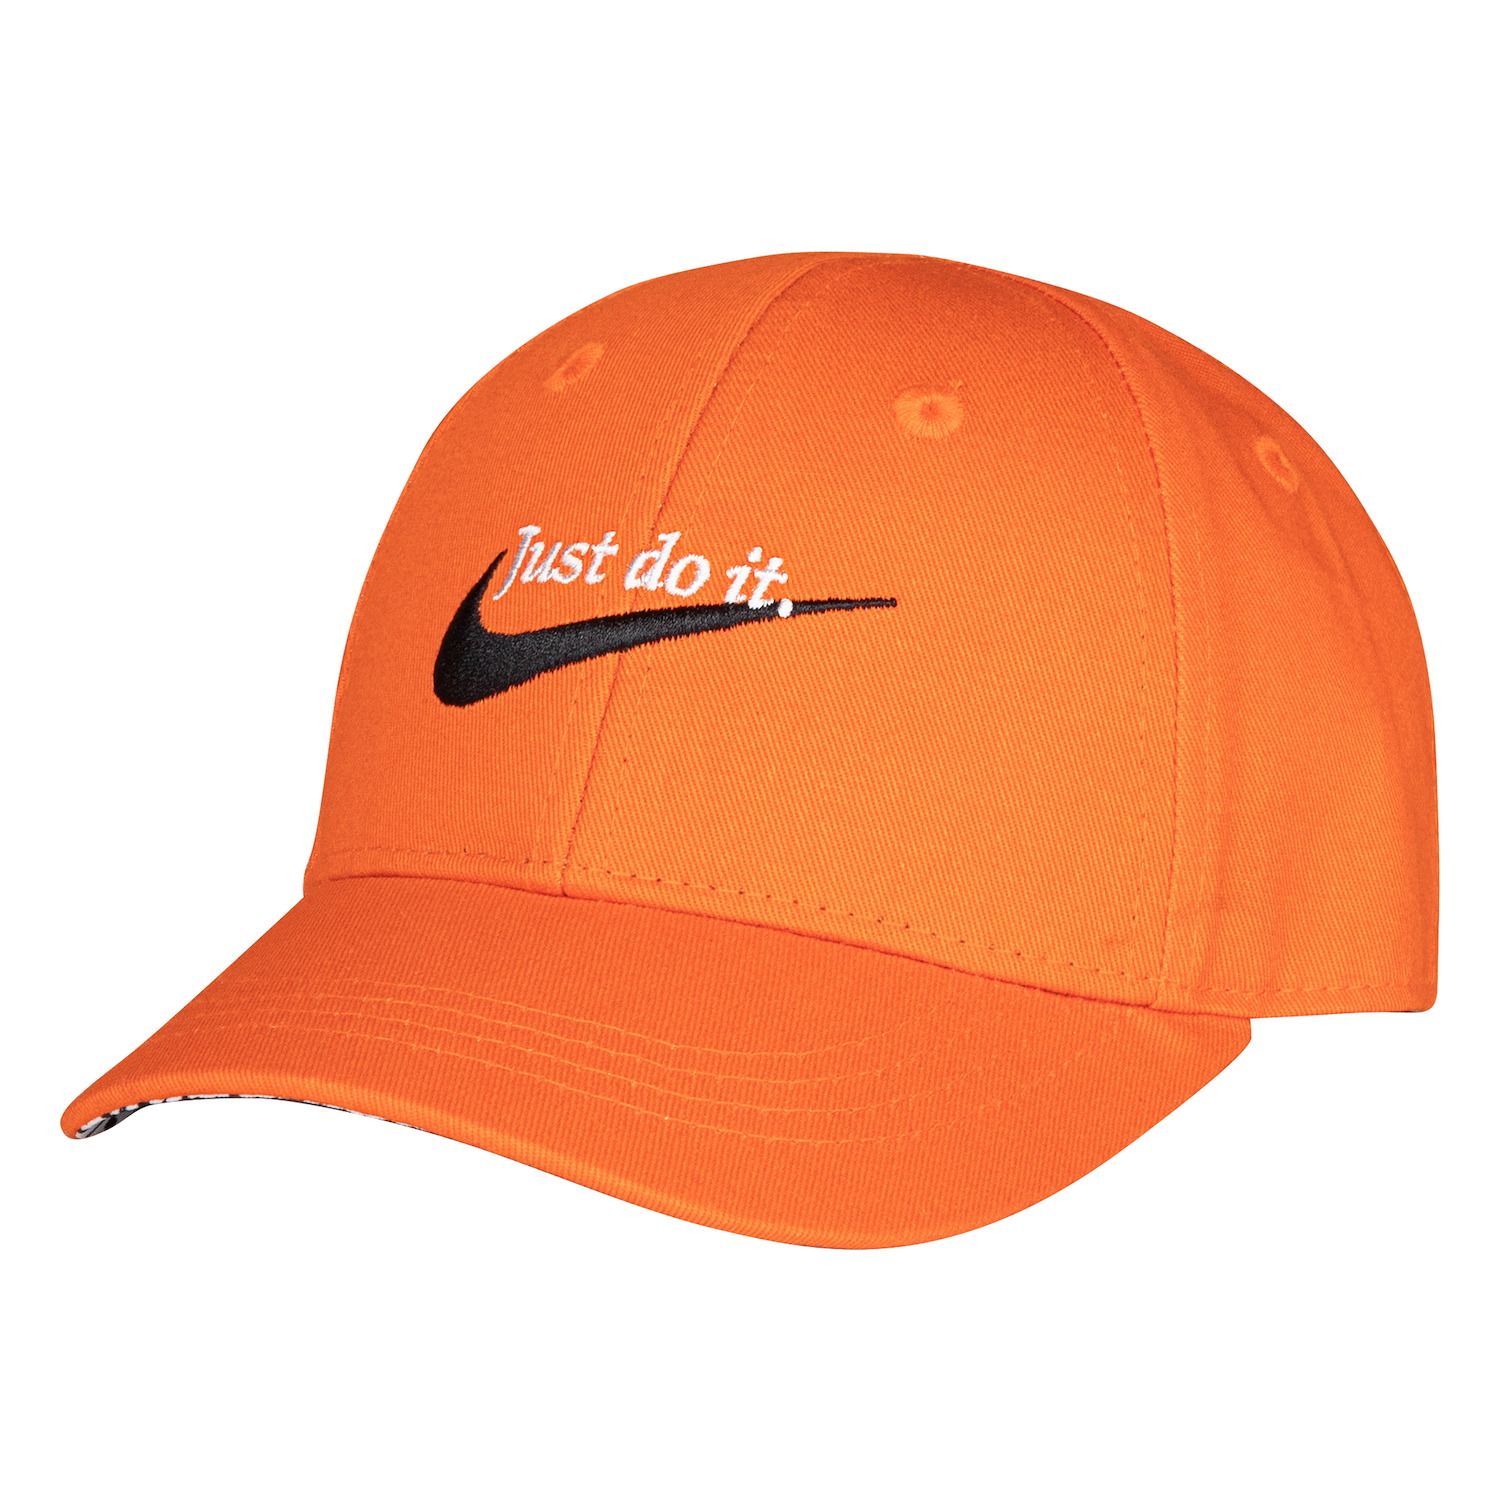 orange and black nike hat